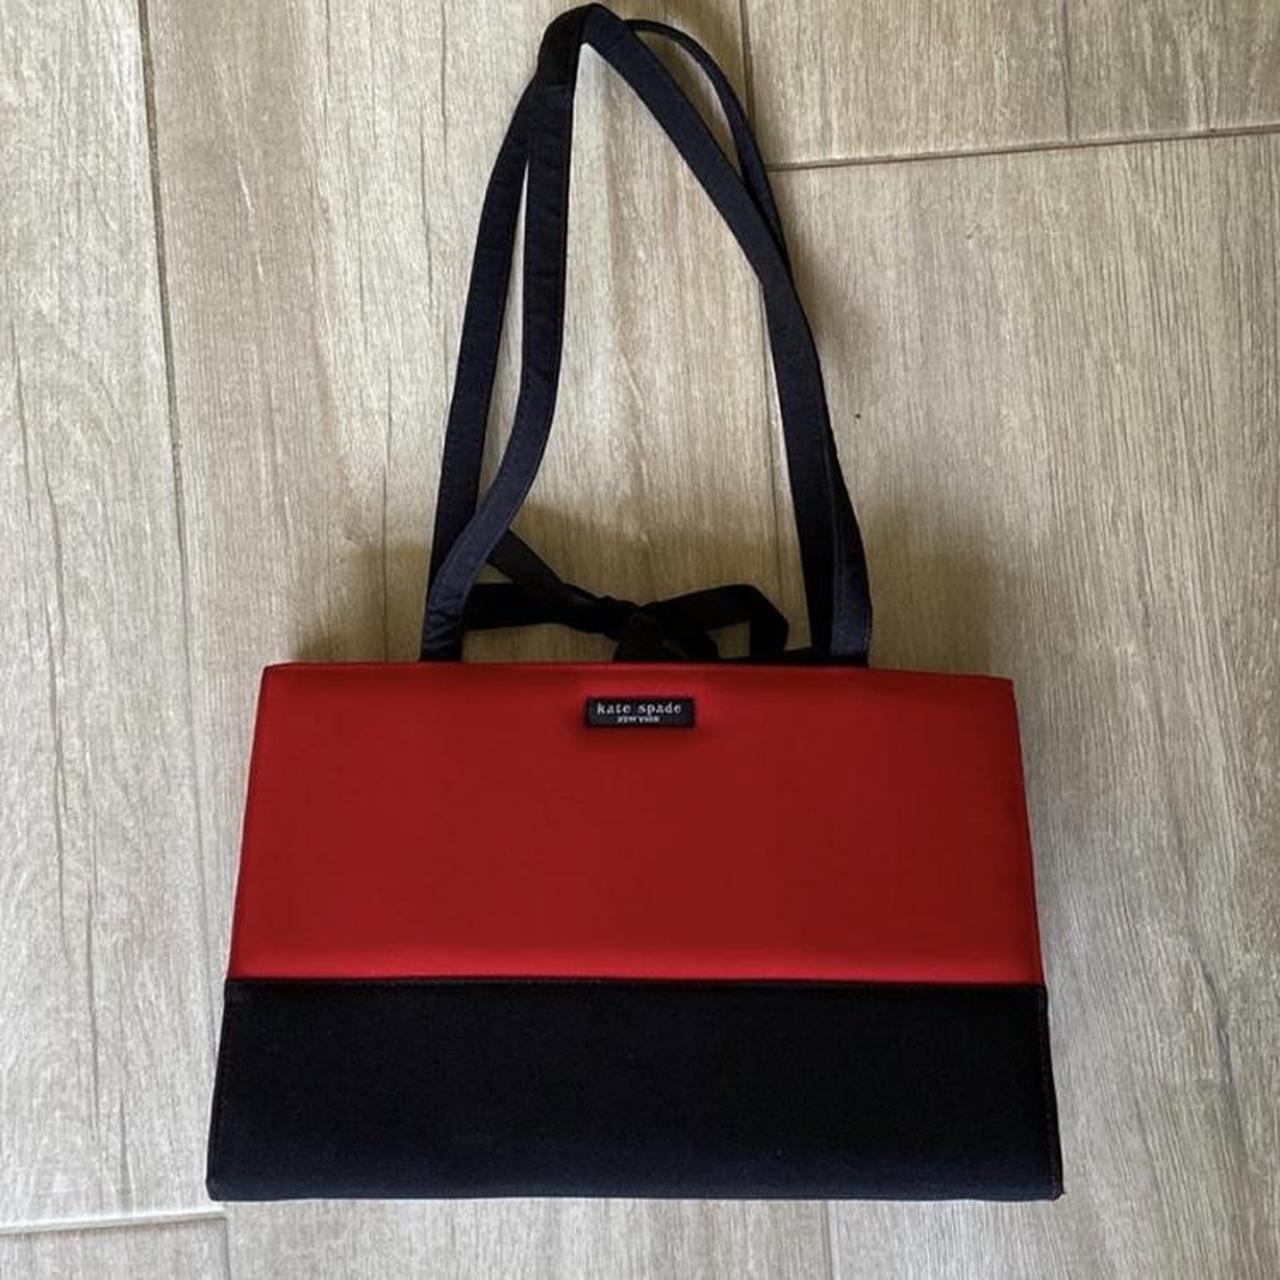 kate spade new york Red Handbags, Purses & Wallets | Dillard's